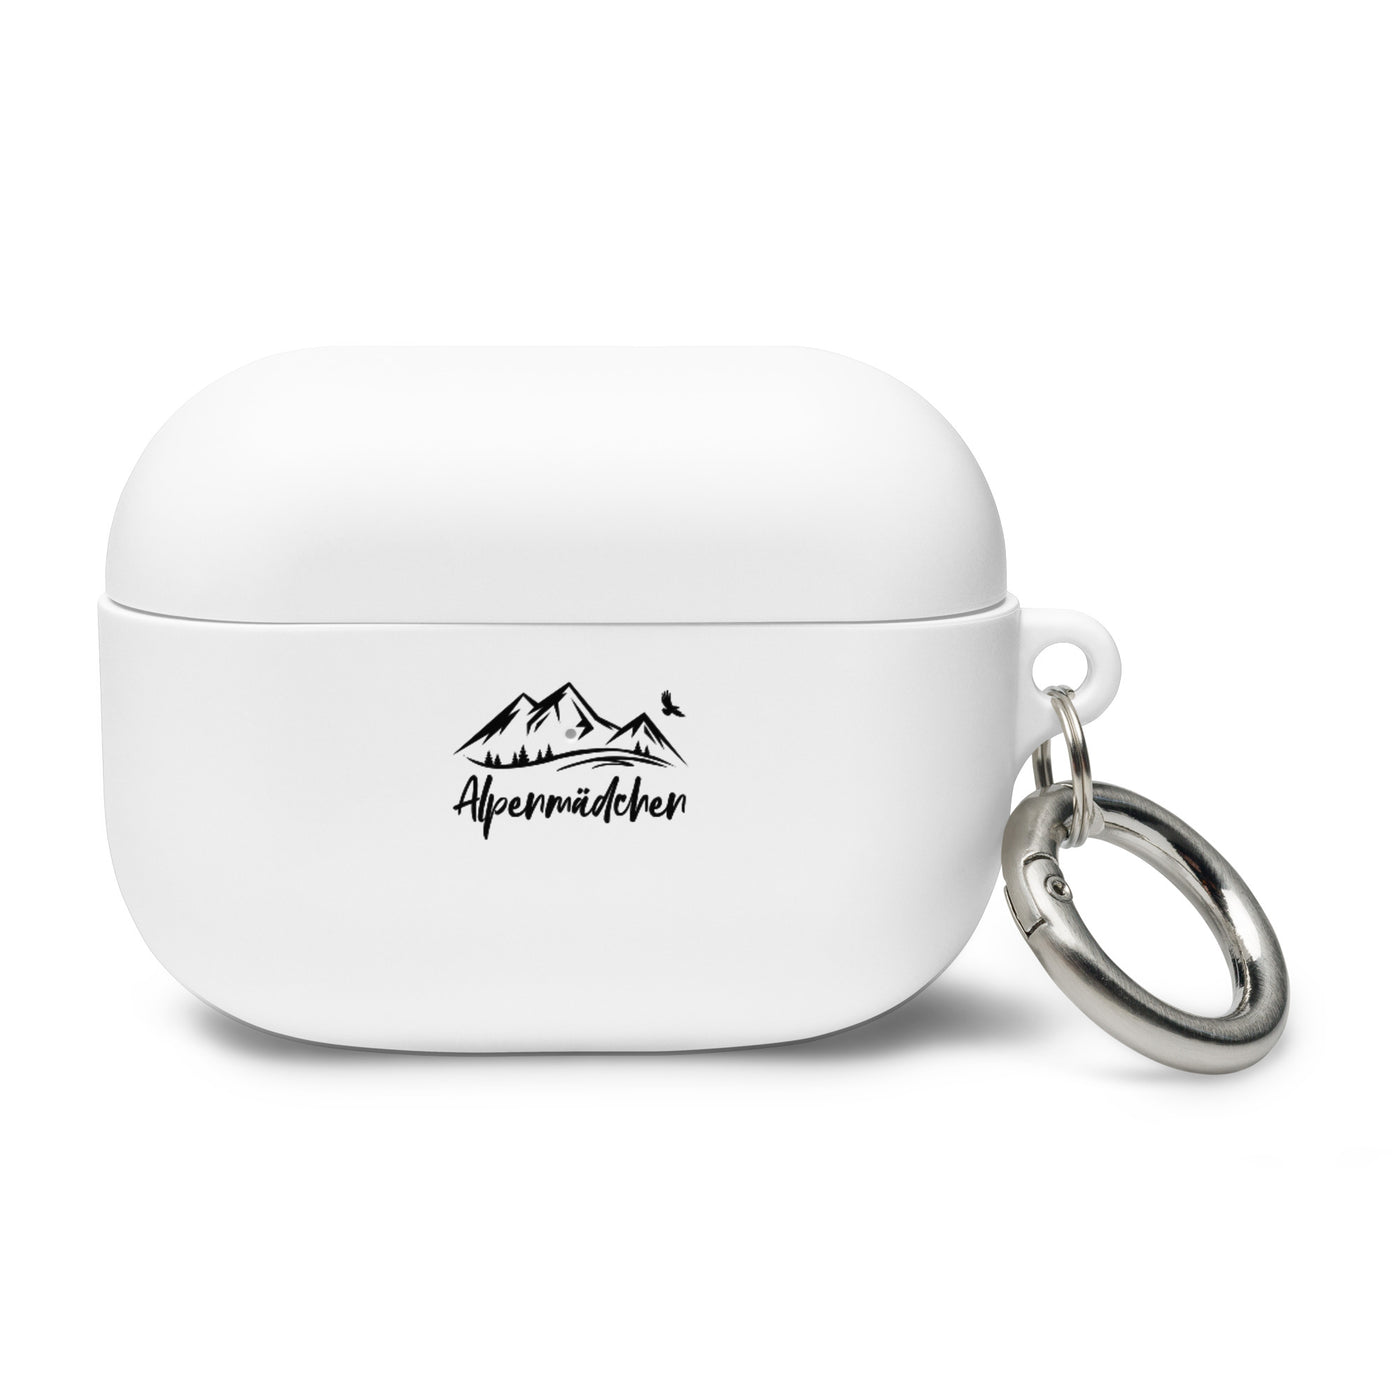 Alpenmadchen - AirPods Case berge Weiß AirPods Pro